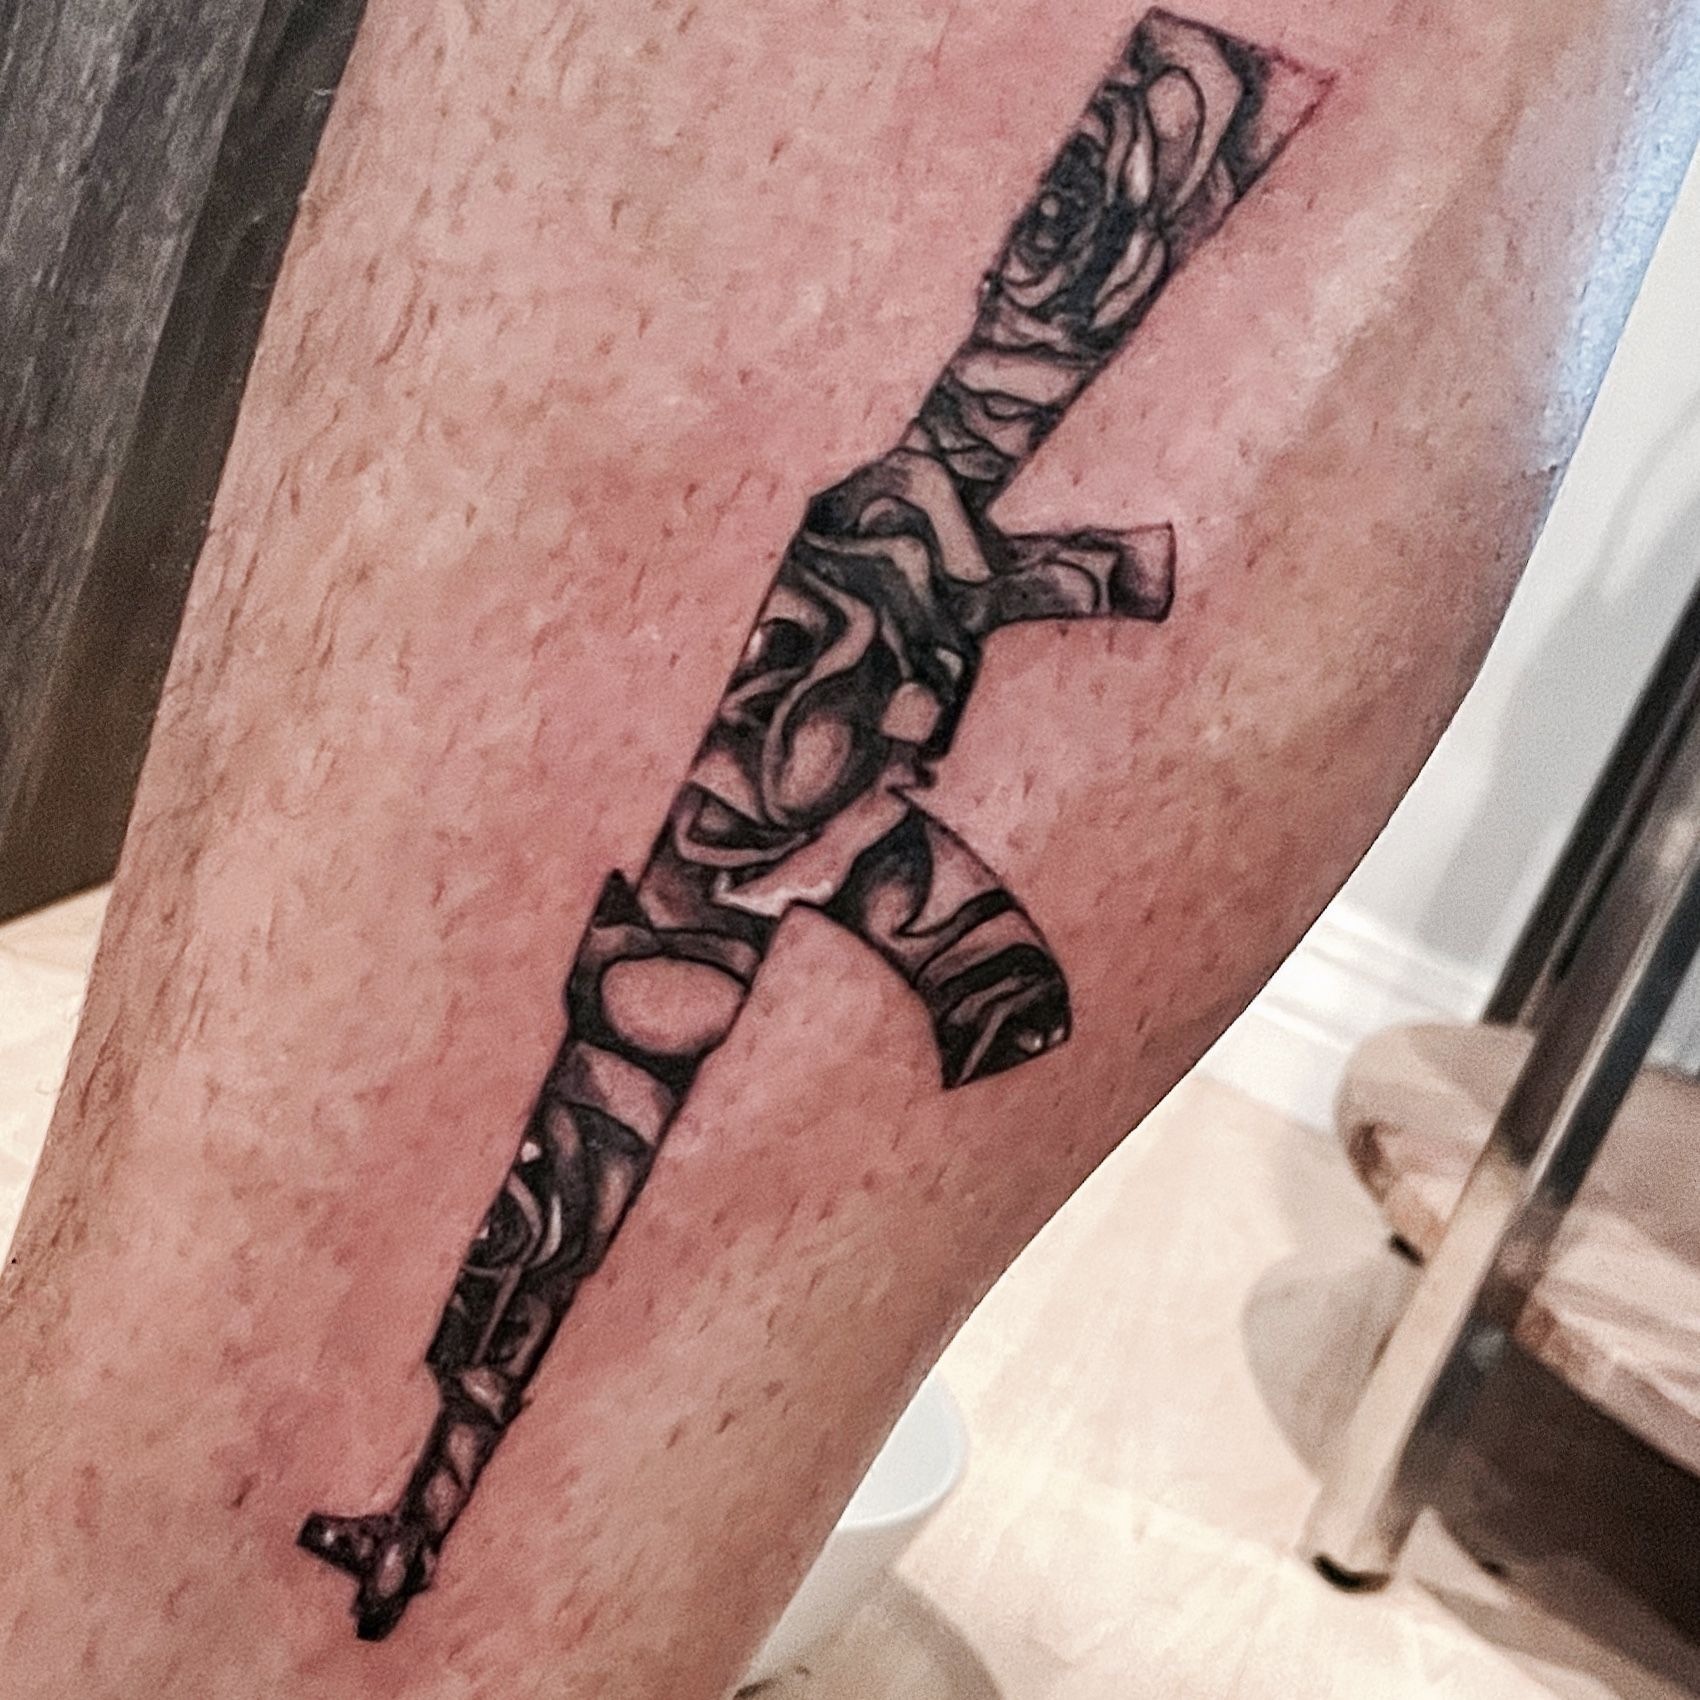 AK-47 tattoo by... - Body Arts Tattoo & Piercing Studio | Facebook